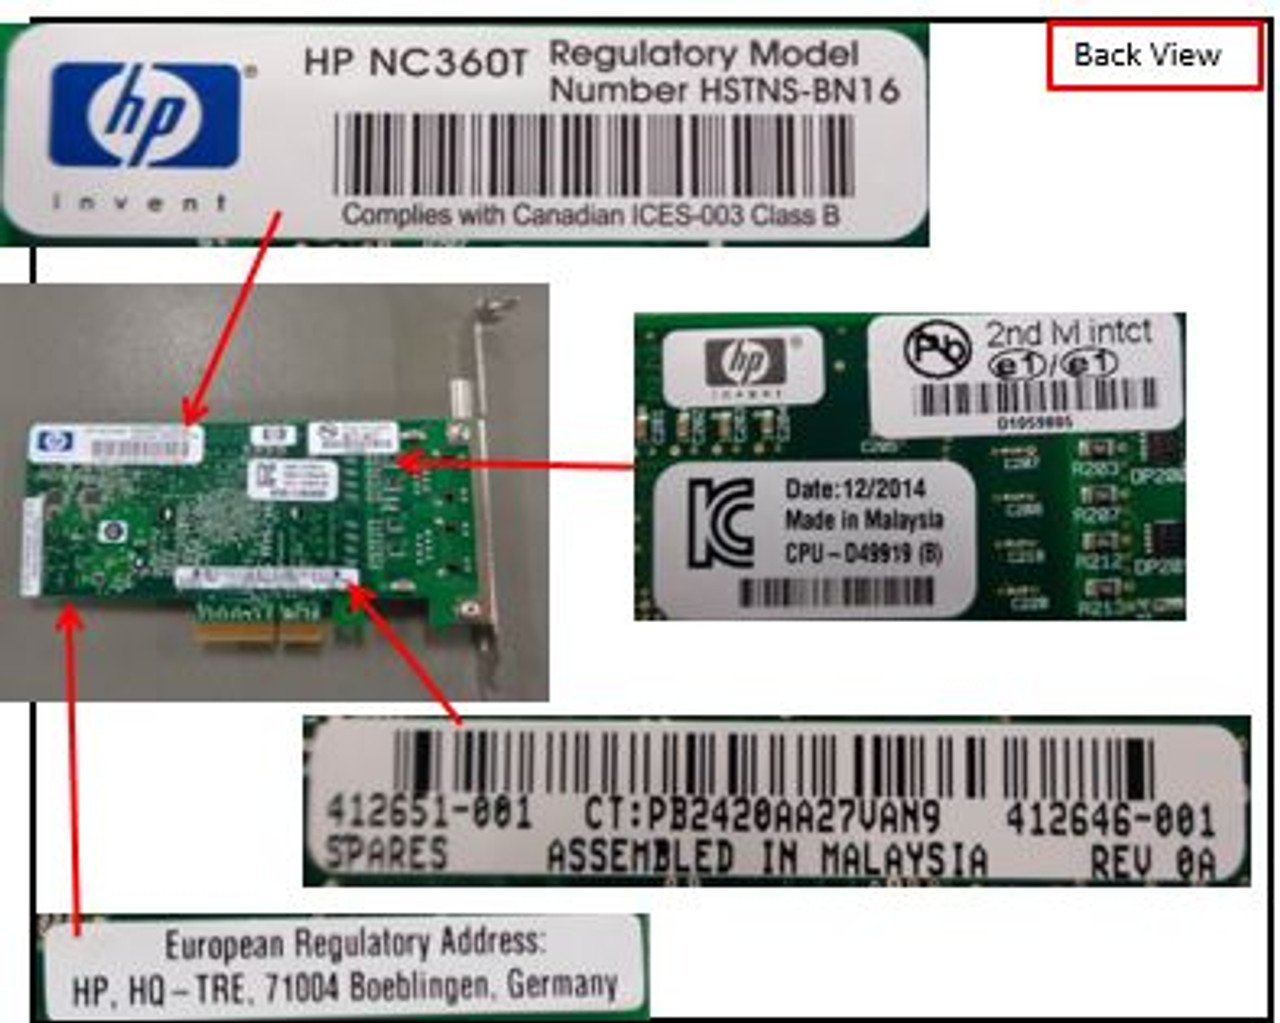 SPS-NC360T;GIGABIT ADPTR;PCIe;2 PORT - 412651-001